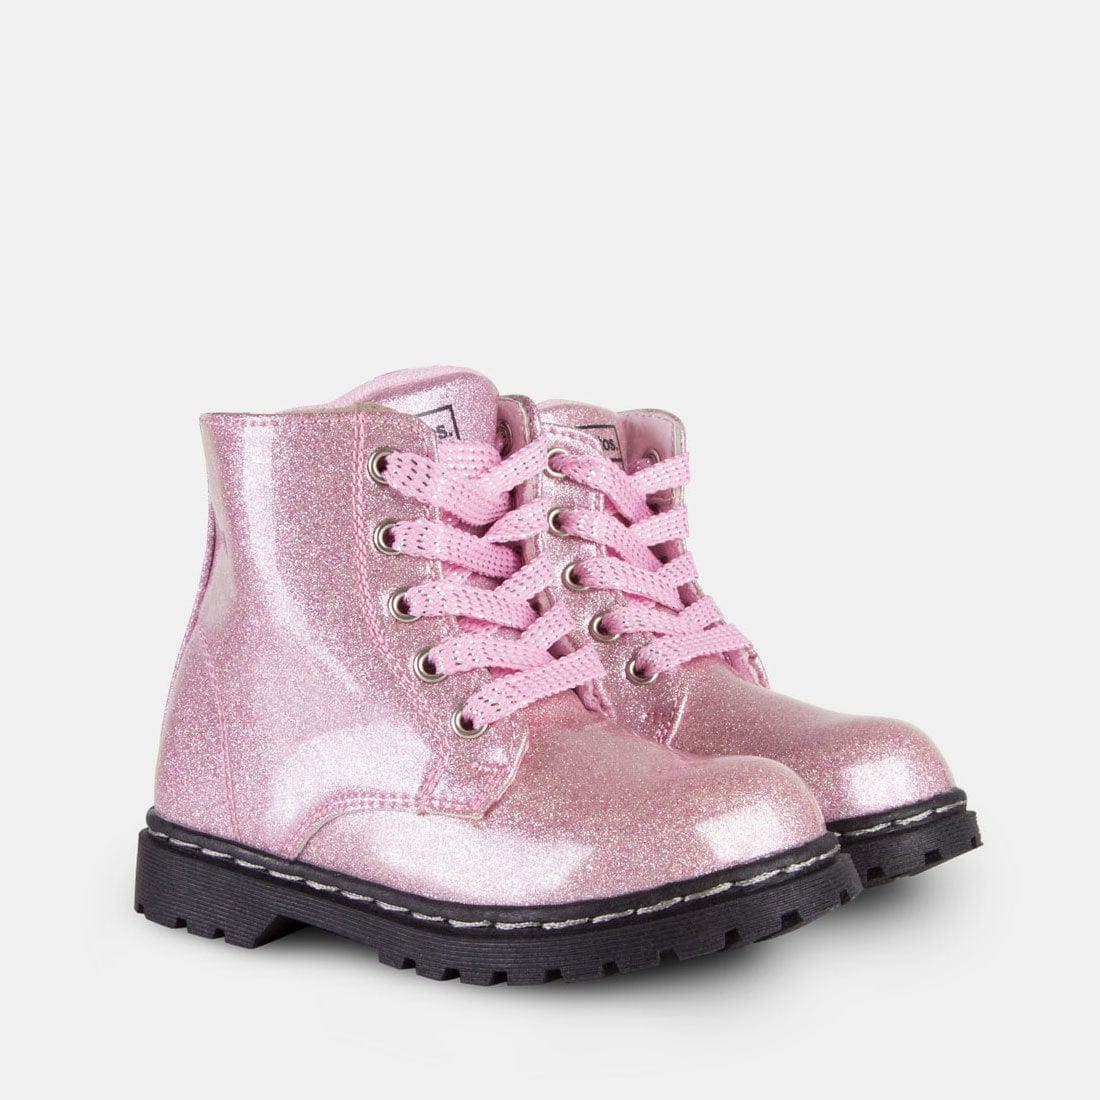 CONGUITOS Shoes Botas de Niña Glitter Charol Rosa